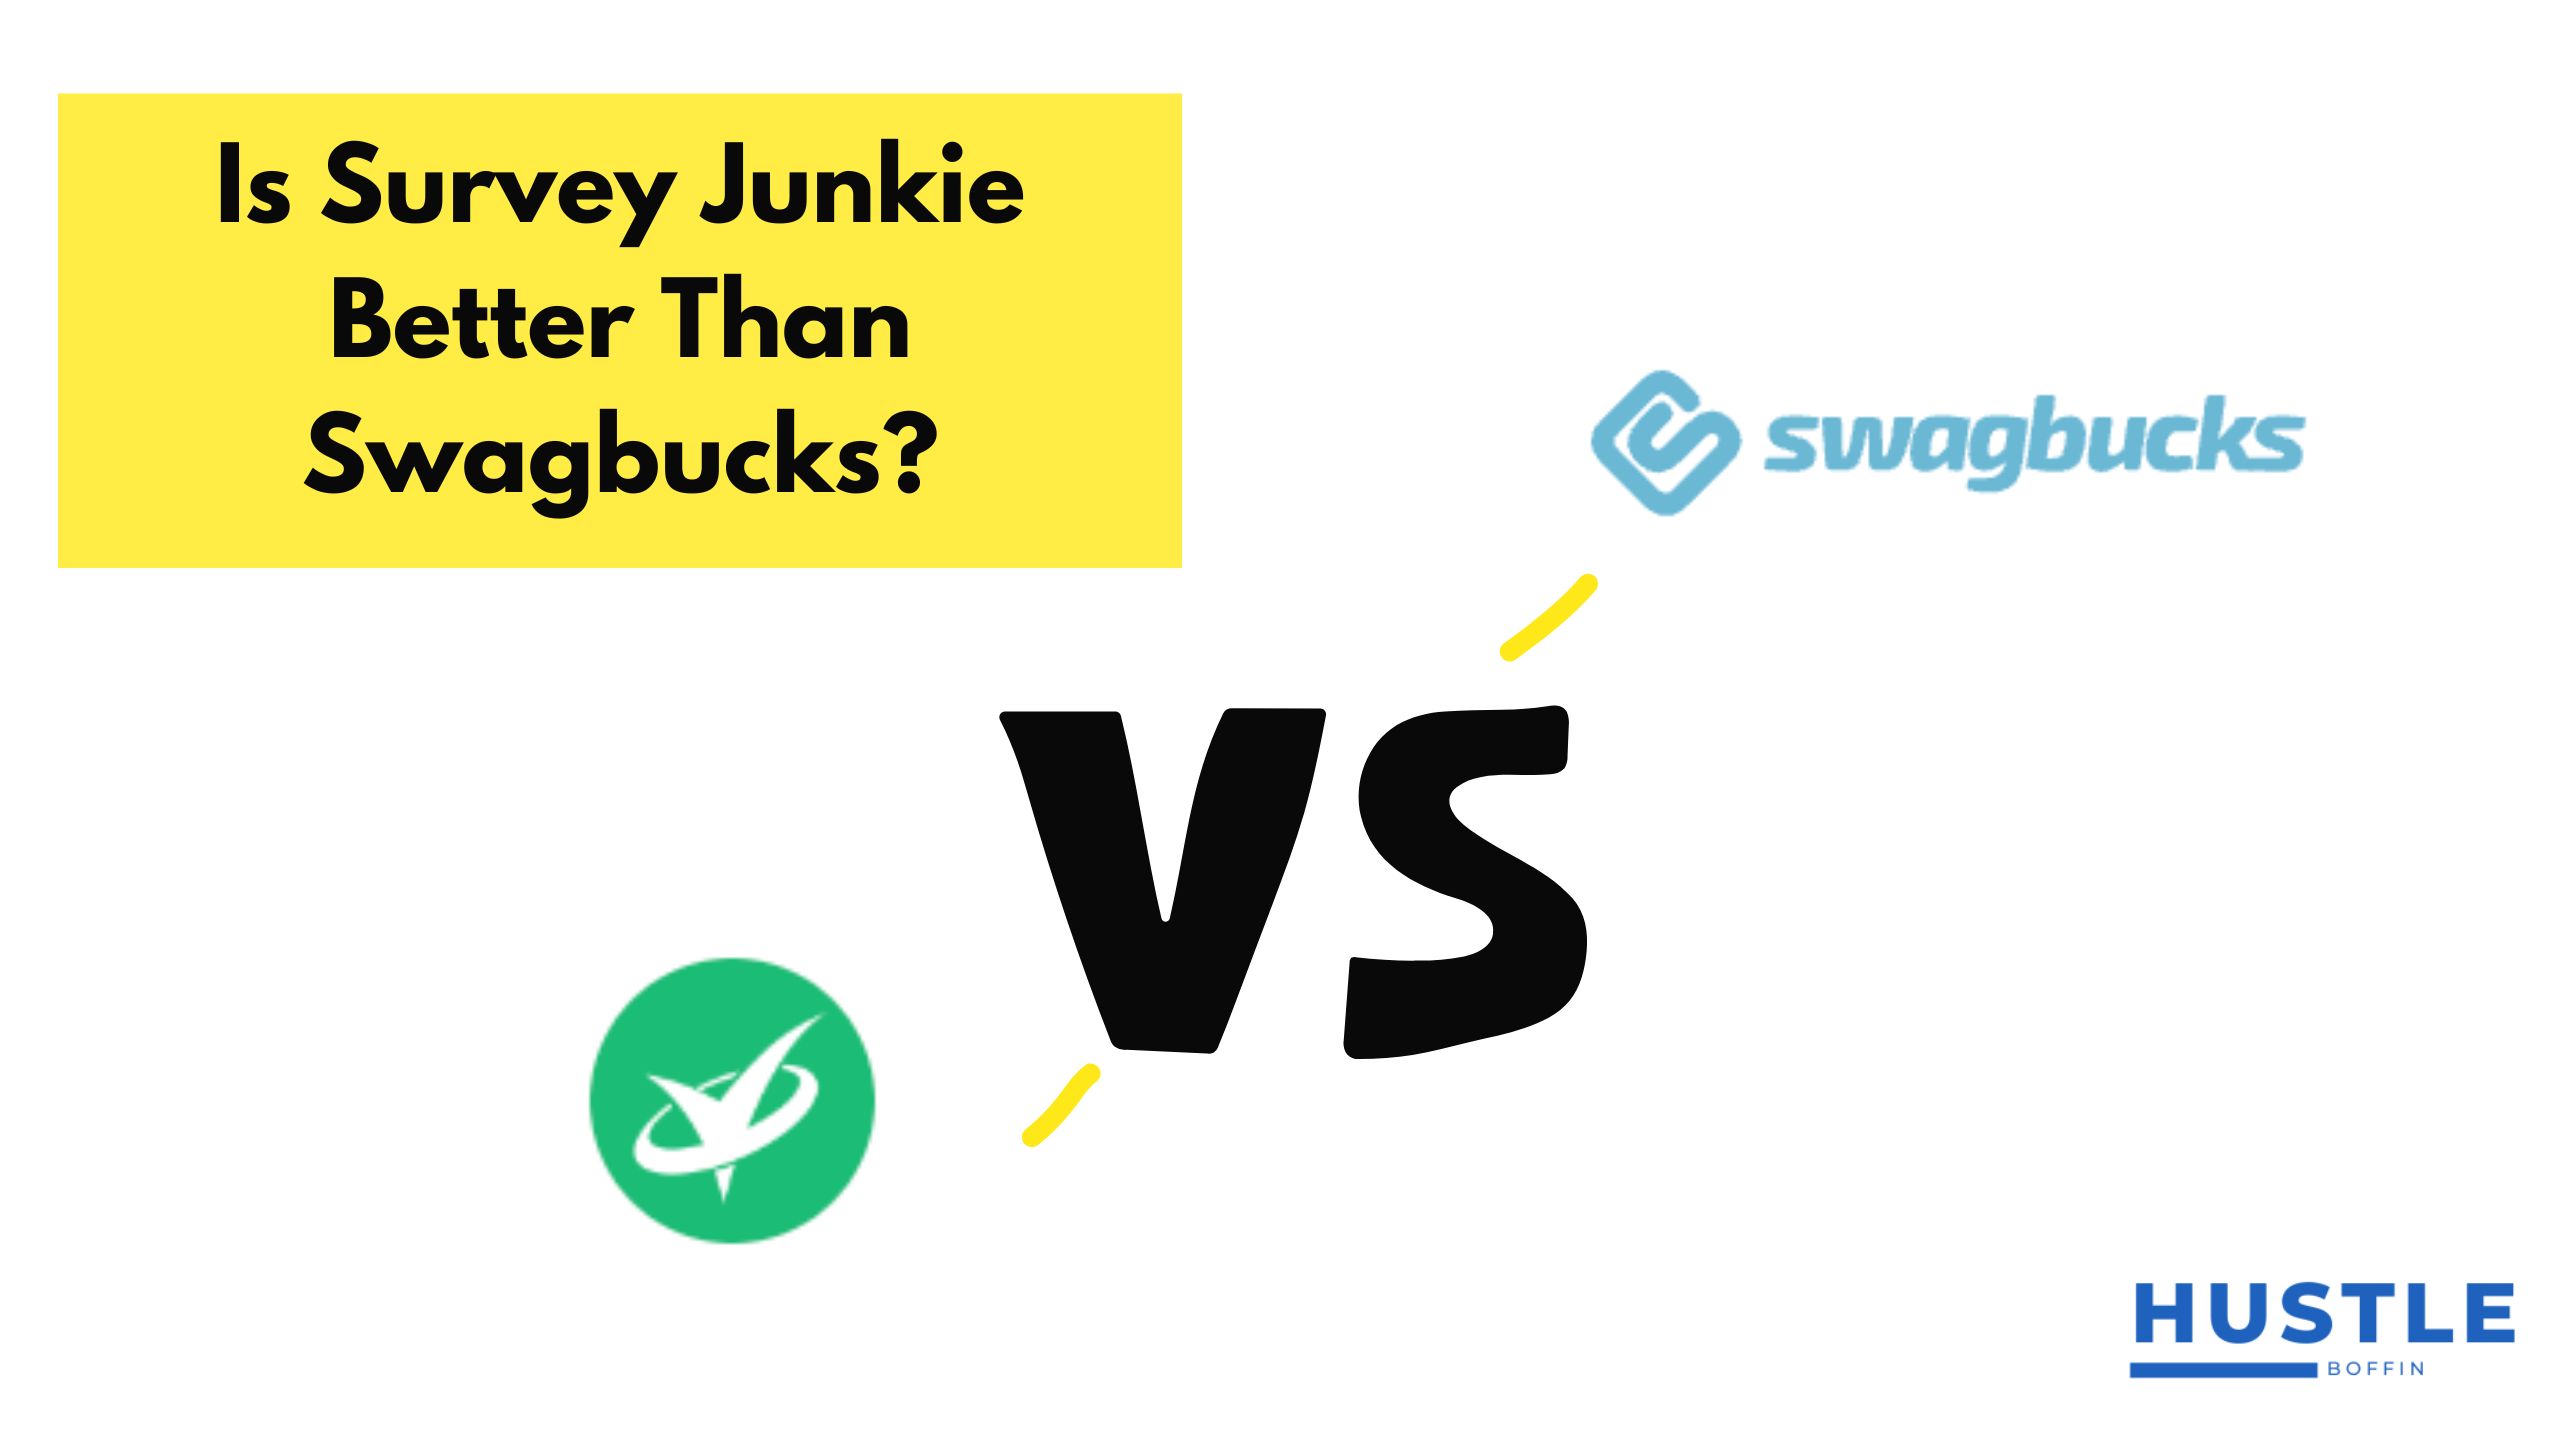 Is Survey Junkie Better Than Swagbucks?